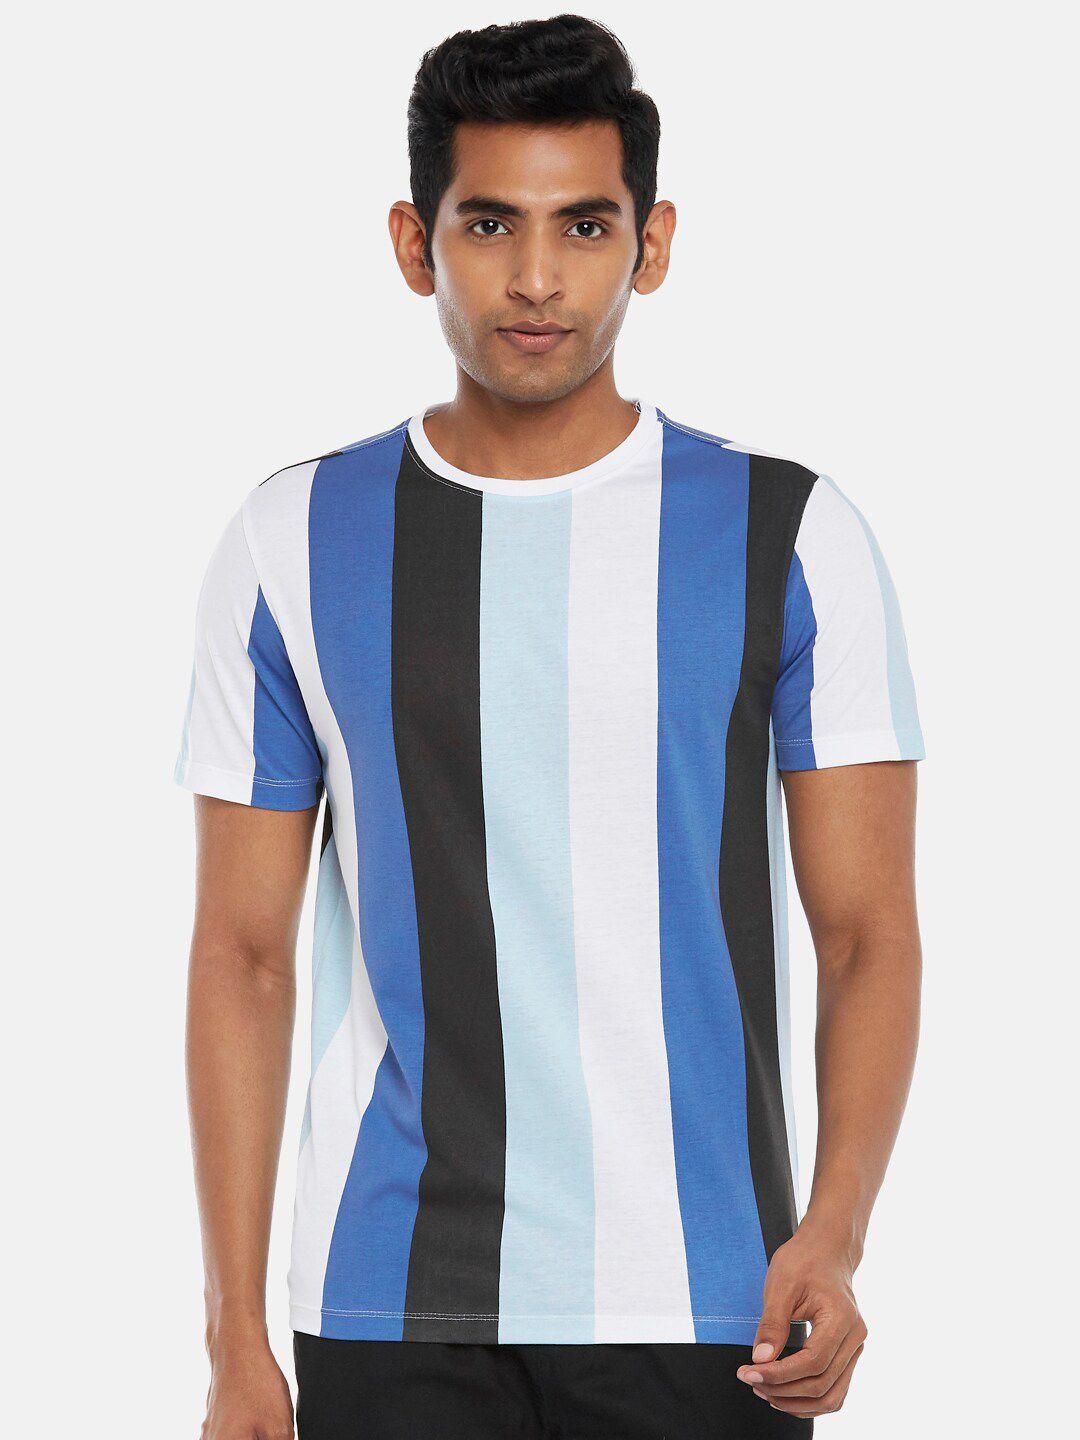 urban ranger by pantaloons men blue striped slim fit t-shirt